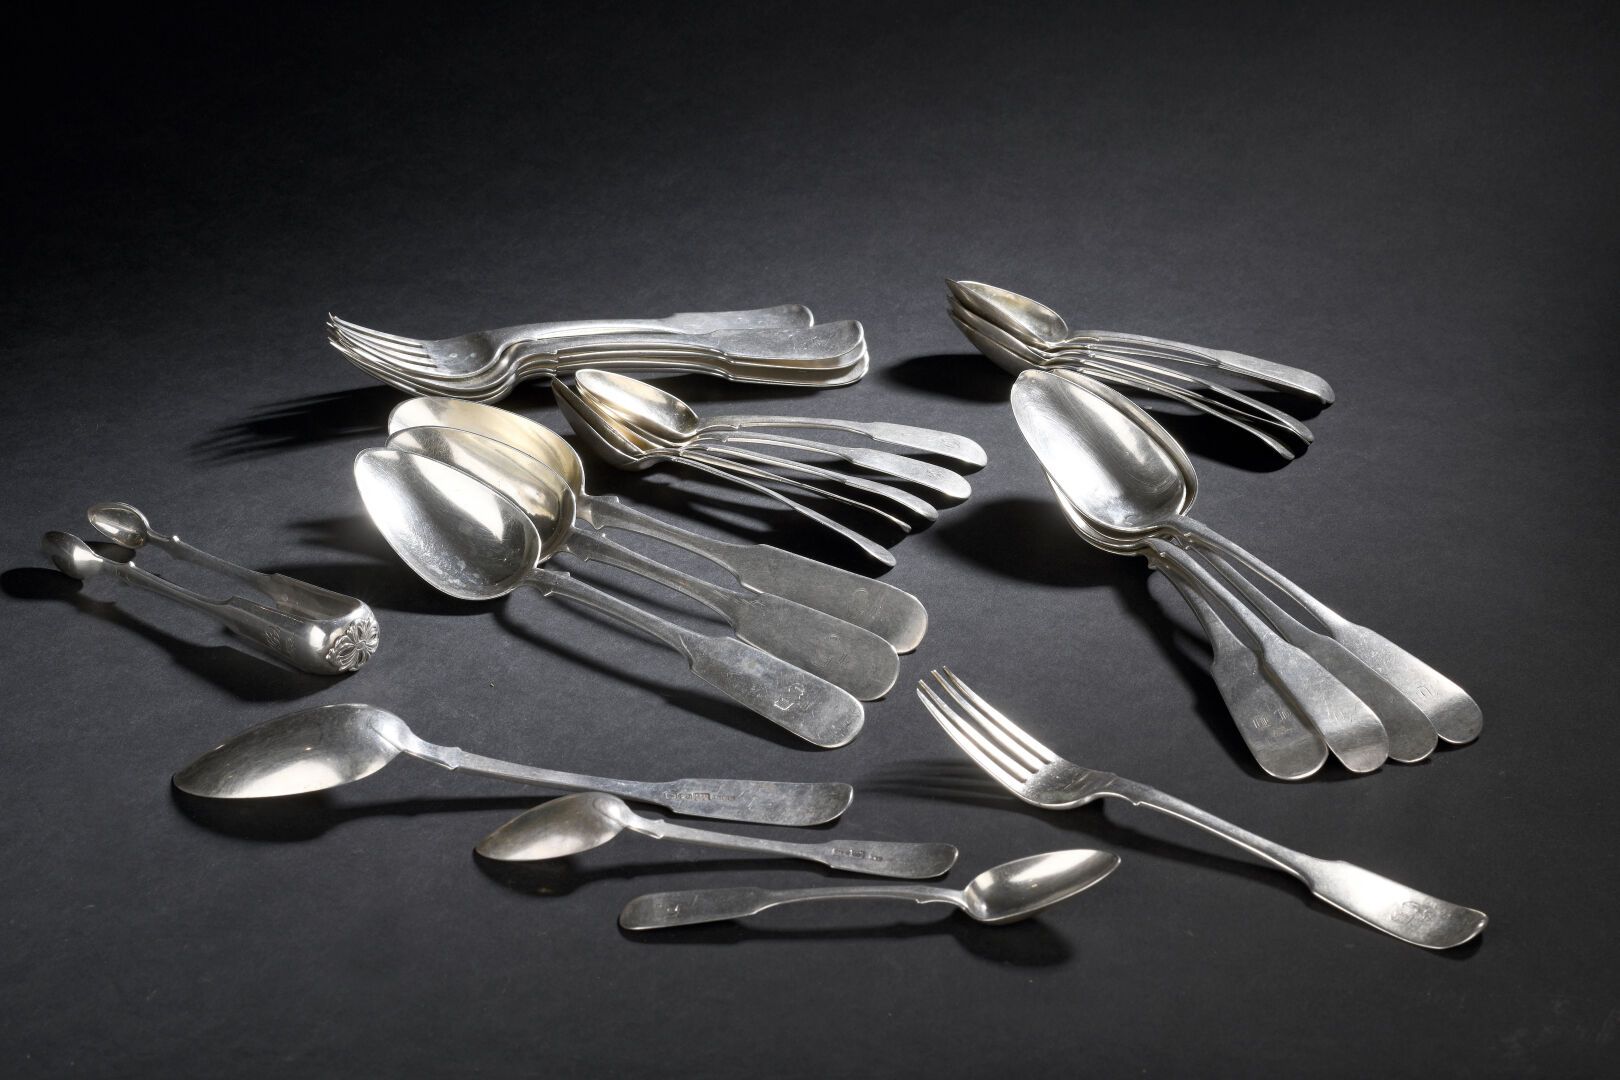 Null 一套五件银质餐具和一件叉子，莫斯科 1846年
铲子上有花纹和皇冠。
包括三个勺子，十二个小勺子和一个糖钳。
重量1269克